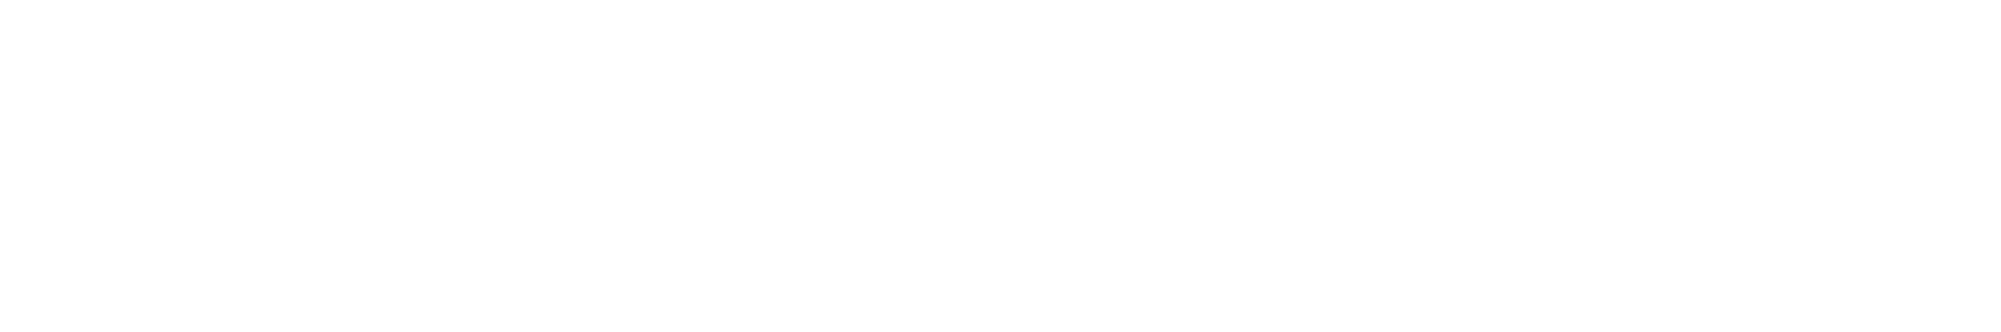 Tesco Direct Logo